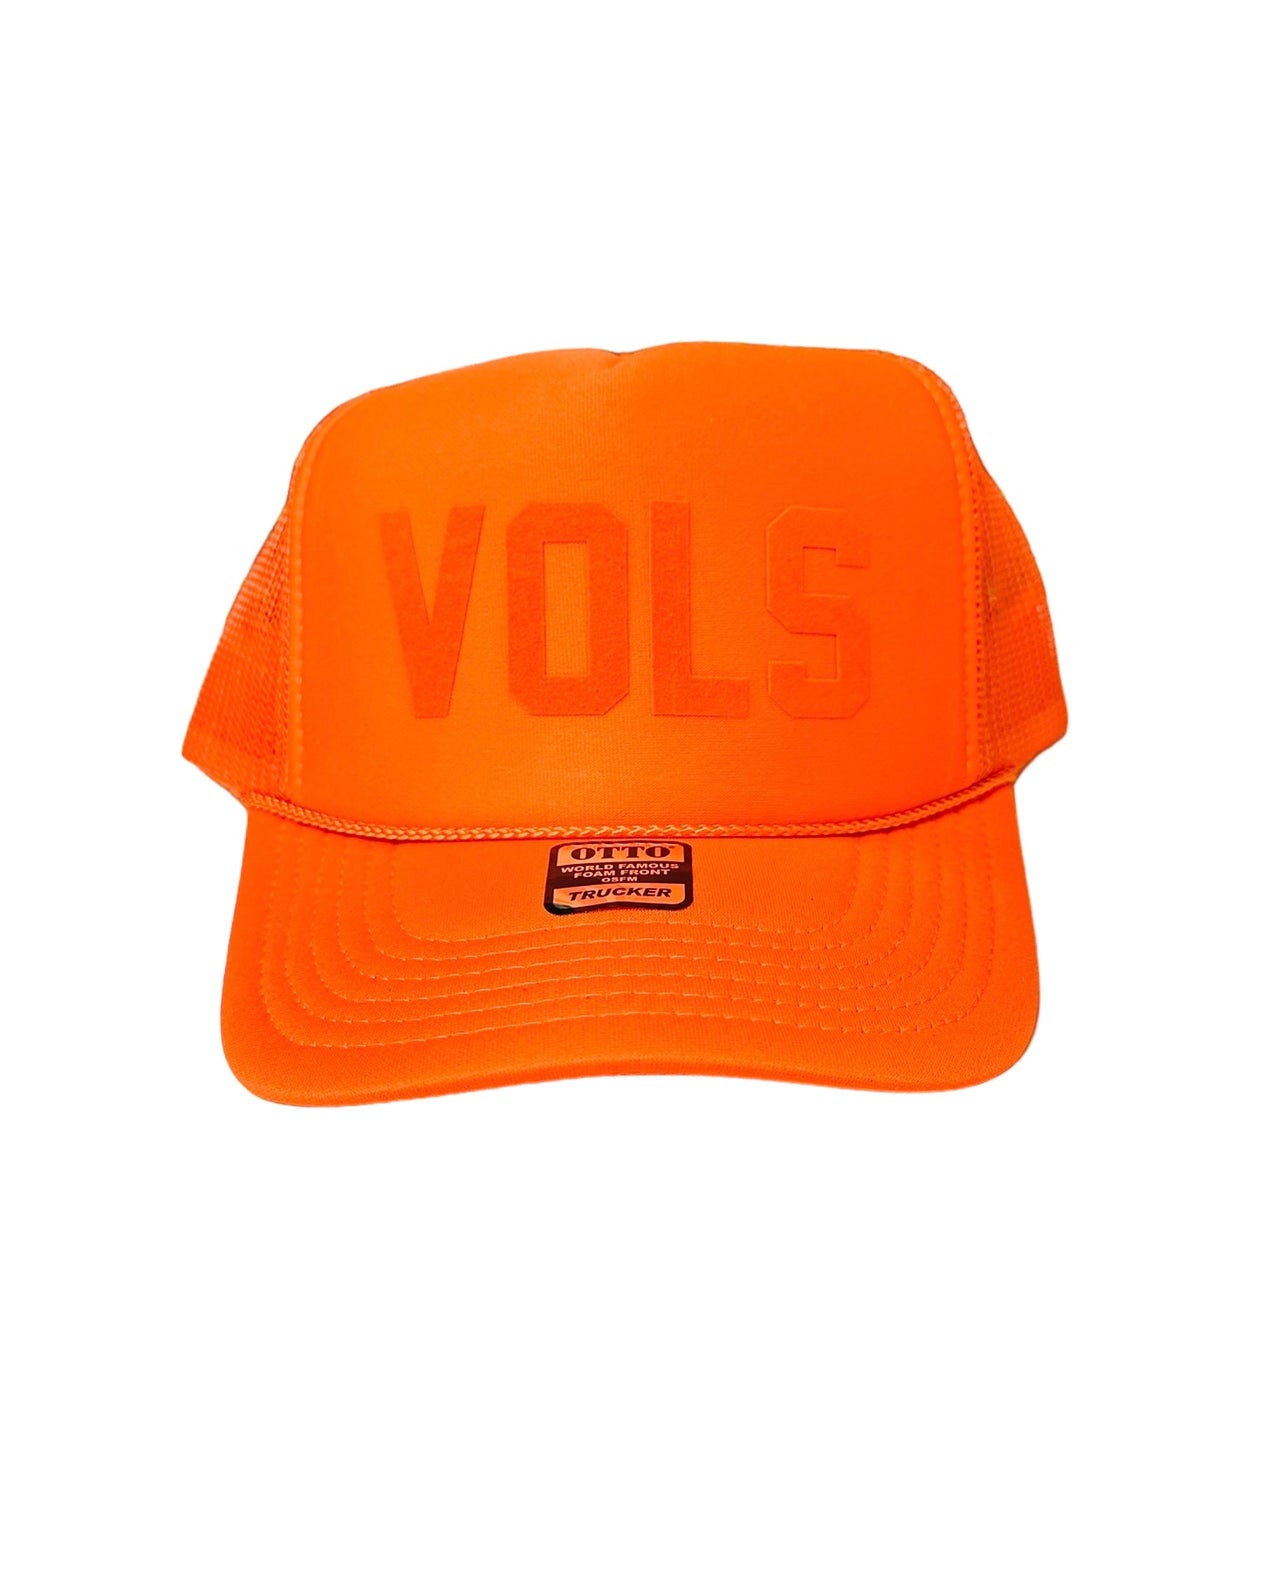 T.O.T. Trucker - VOLS - (Orange on Orange)